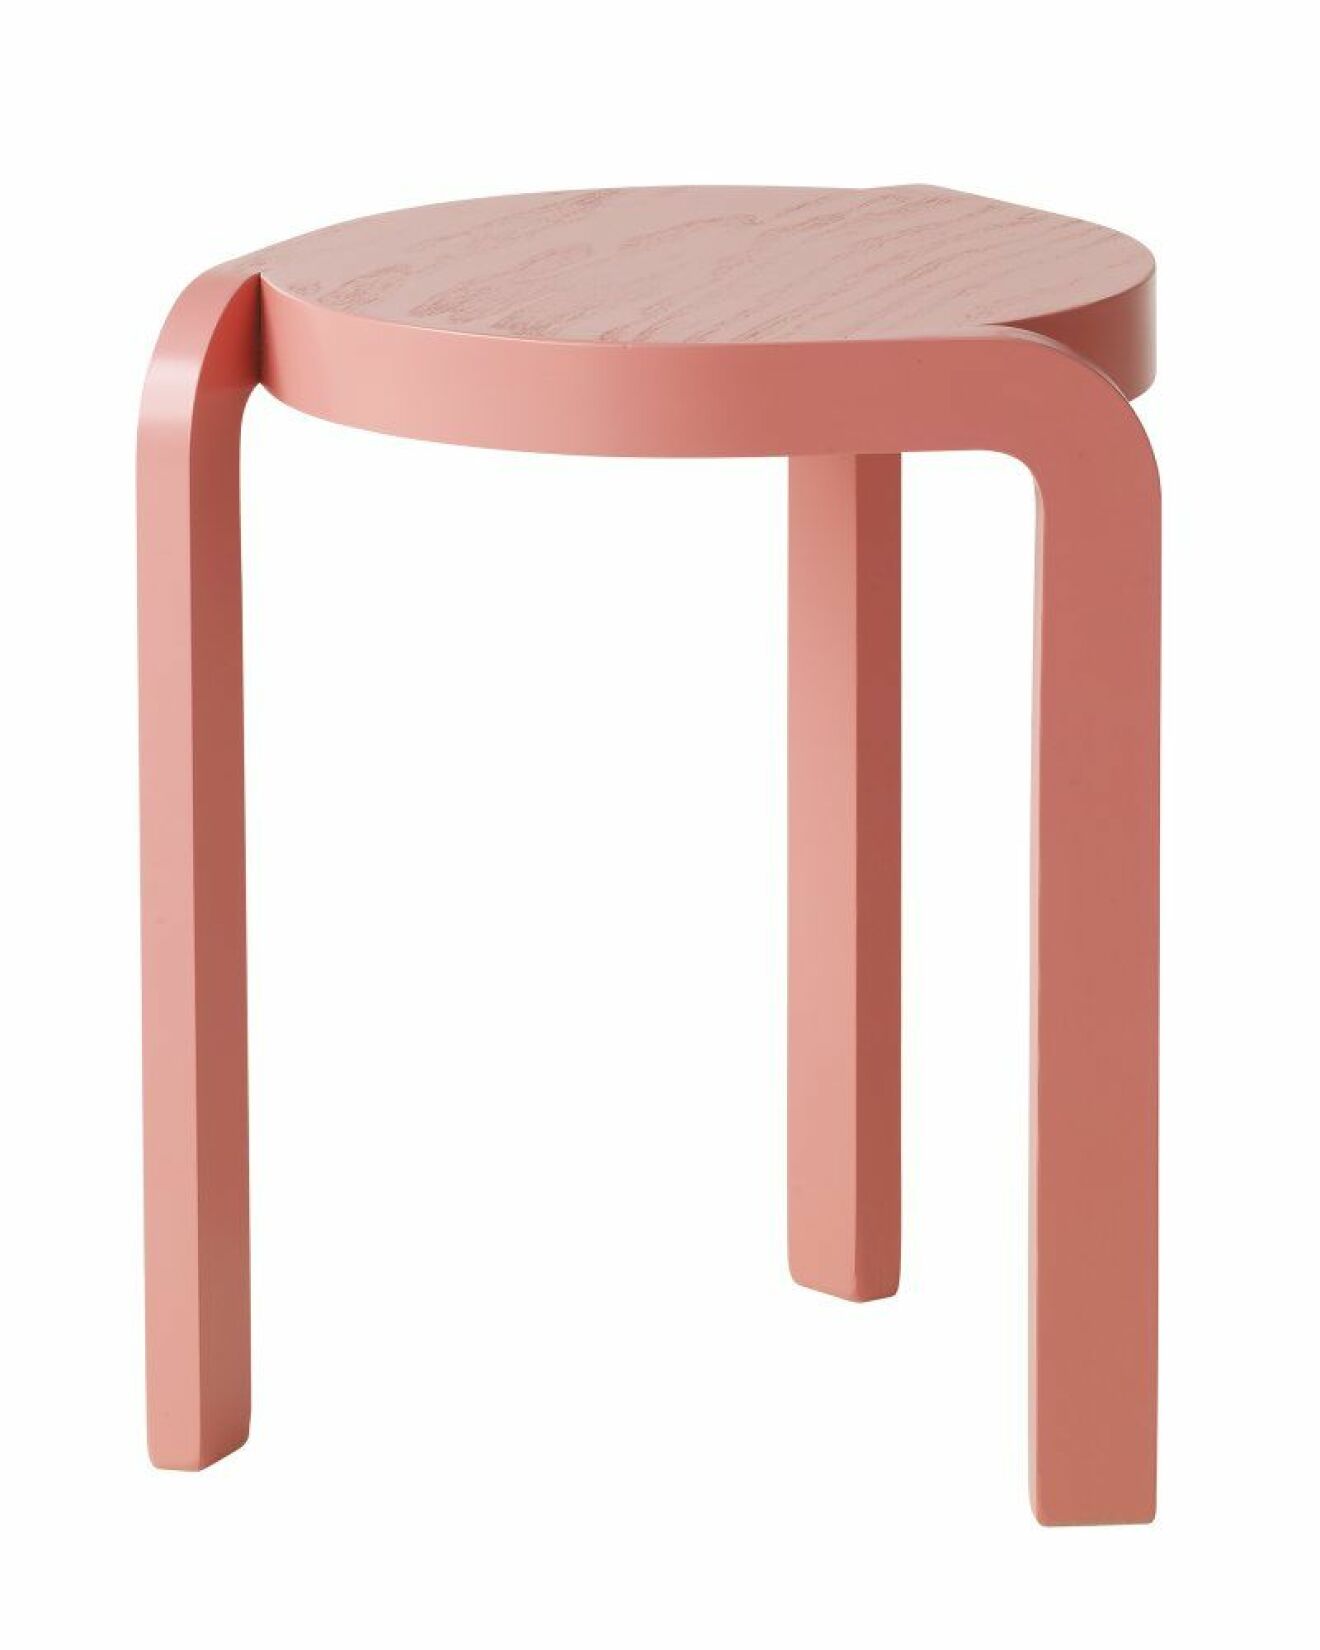 Spin_stool_pink_1